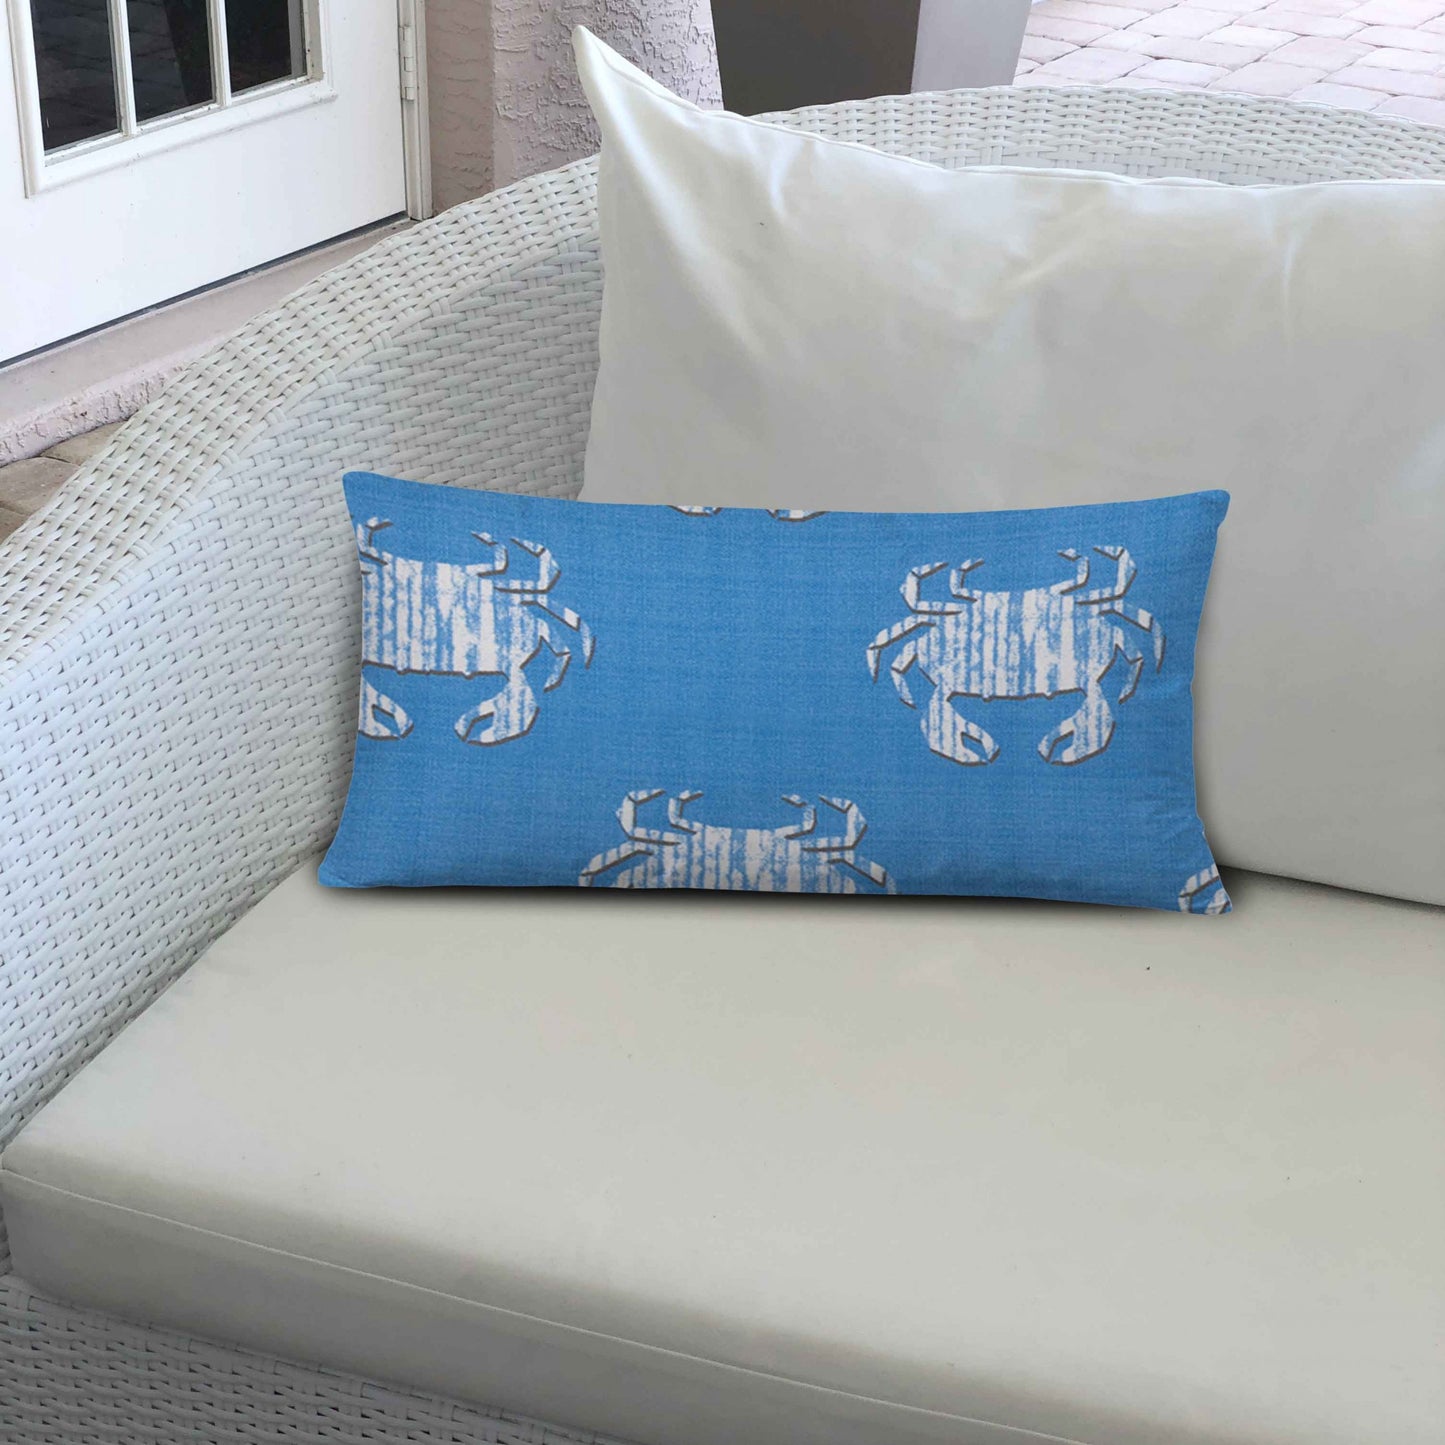 12" X 16" Blue And White Crab Zippered Coastal Lumbar Indoor Outdoor Pillow